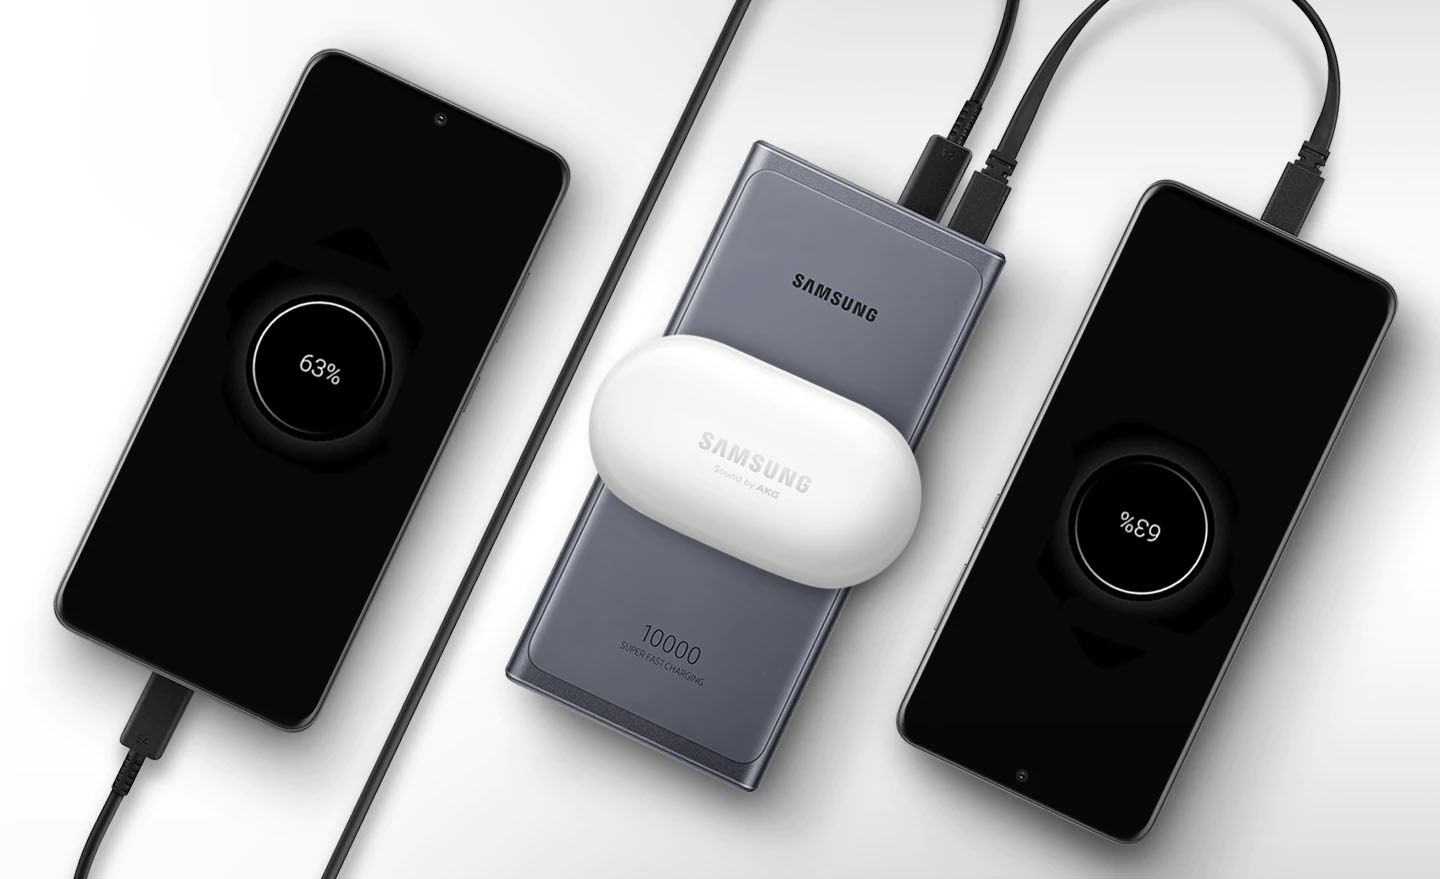 Samsung Powerbank 10000 mAh - Fast Charge Induktives Laden - Neuwertig!